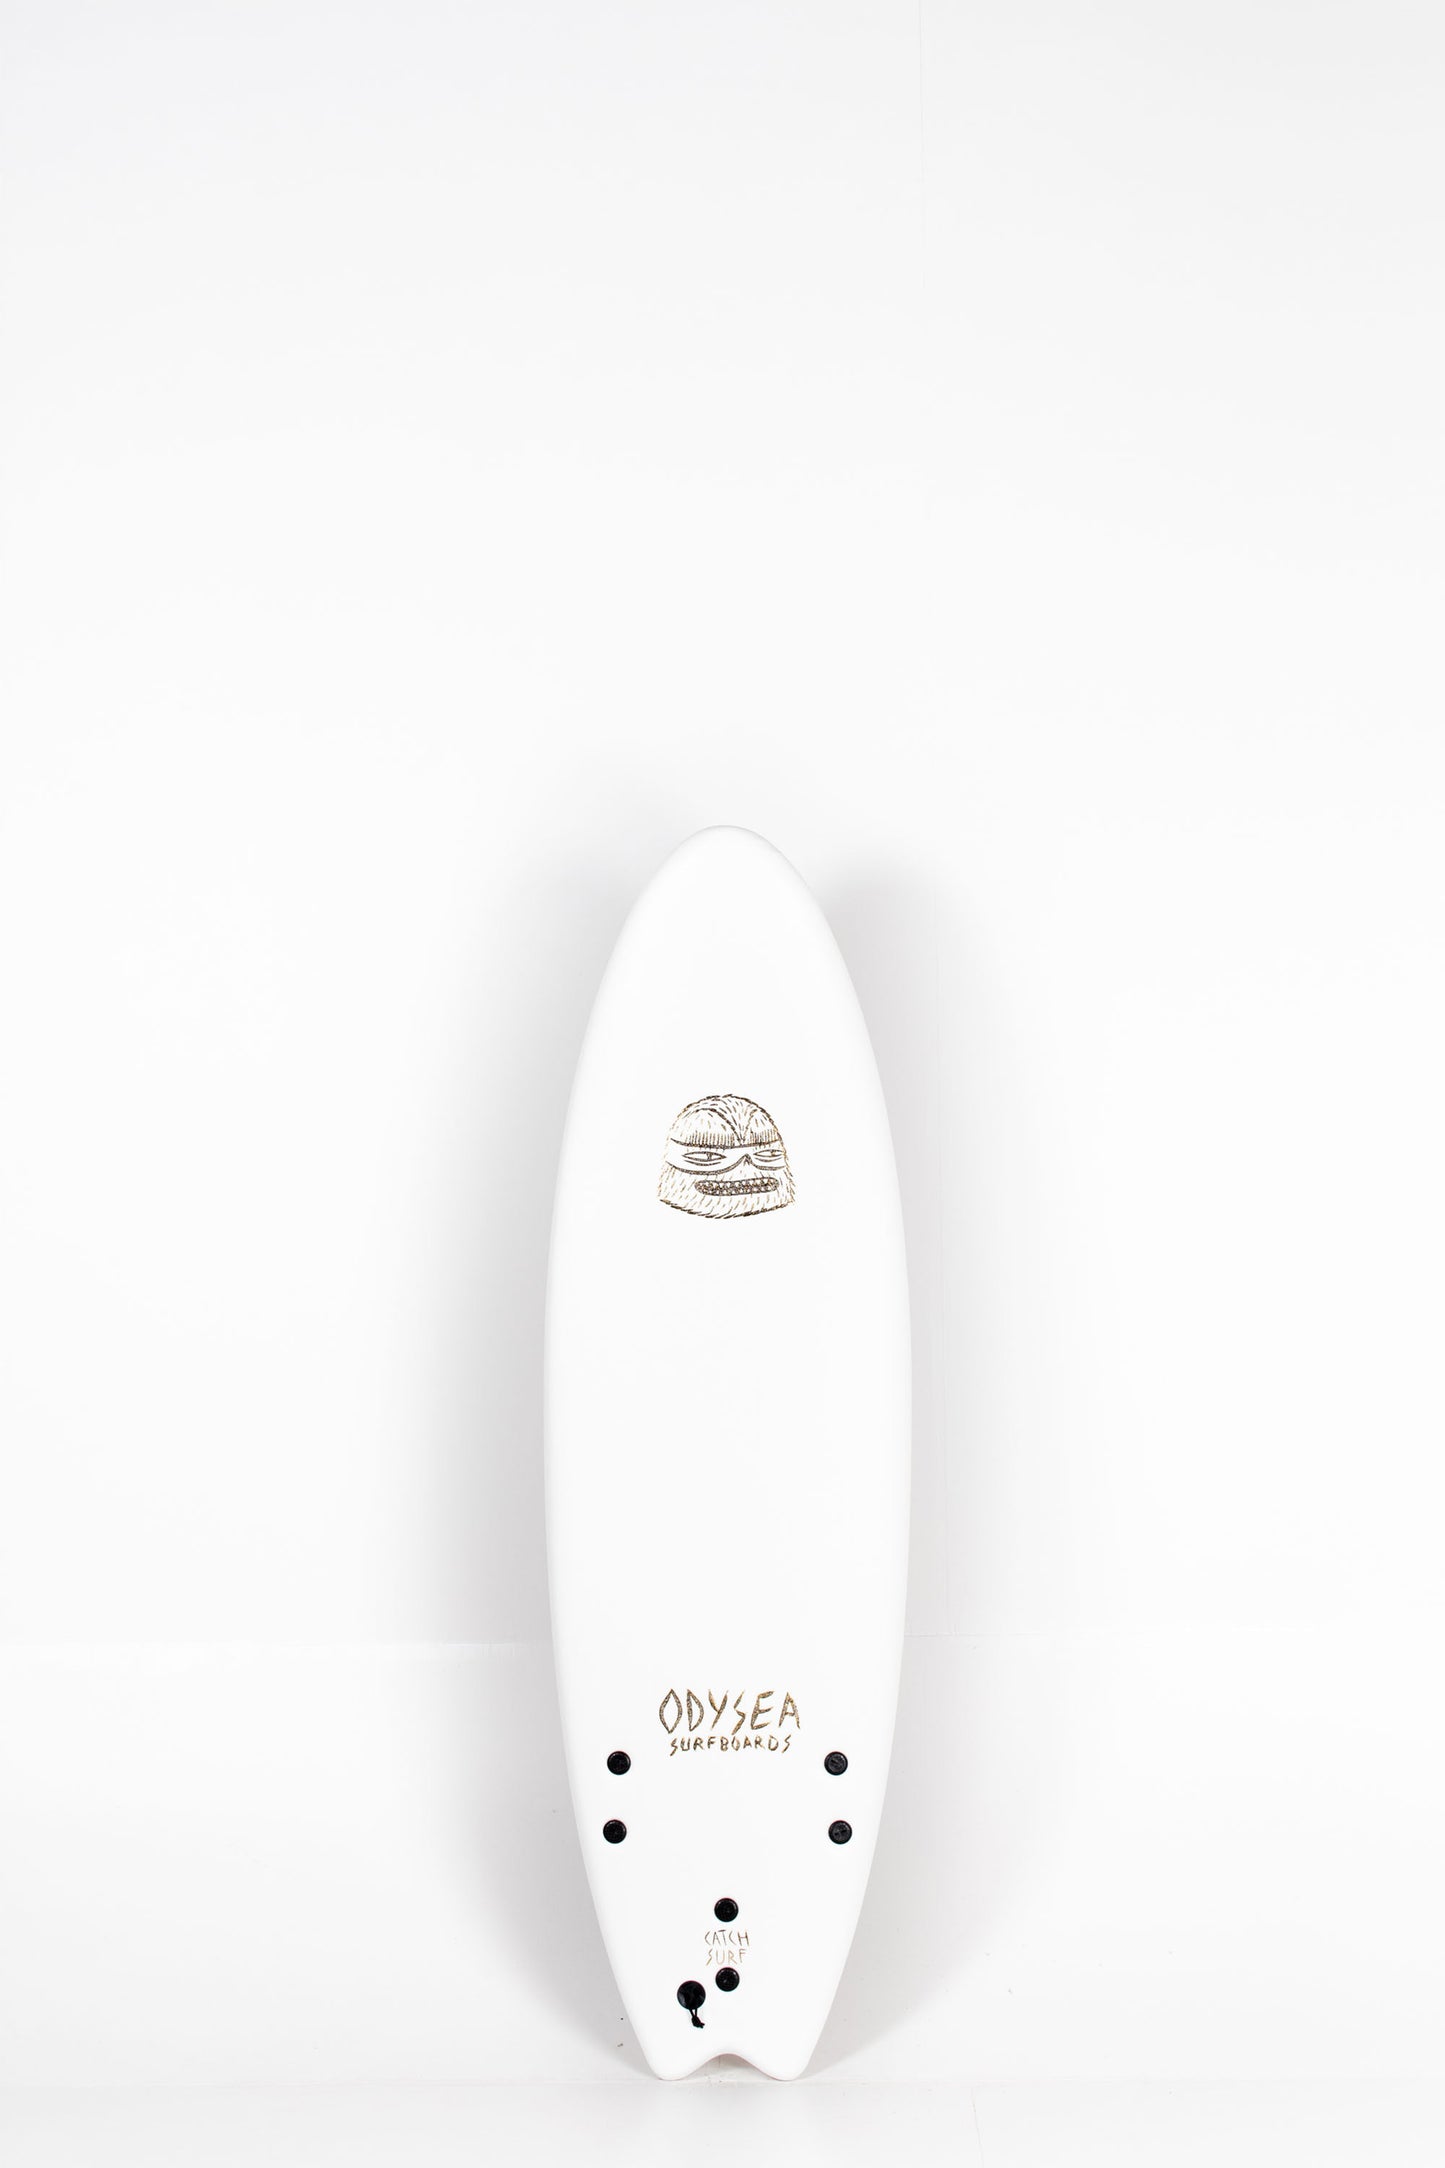 Pukas Surf Shop - Catch Surf - ODYSEA 56 SKIPPER THRUSTER x EVAN ROSSELL PRO - 5'6" x 21.0" x 2,875" x 42l.